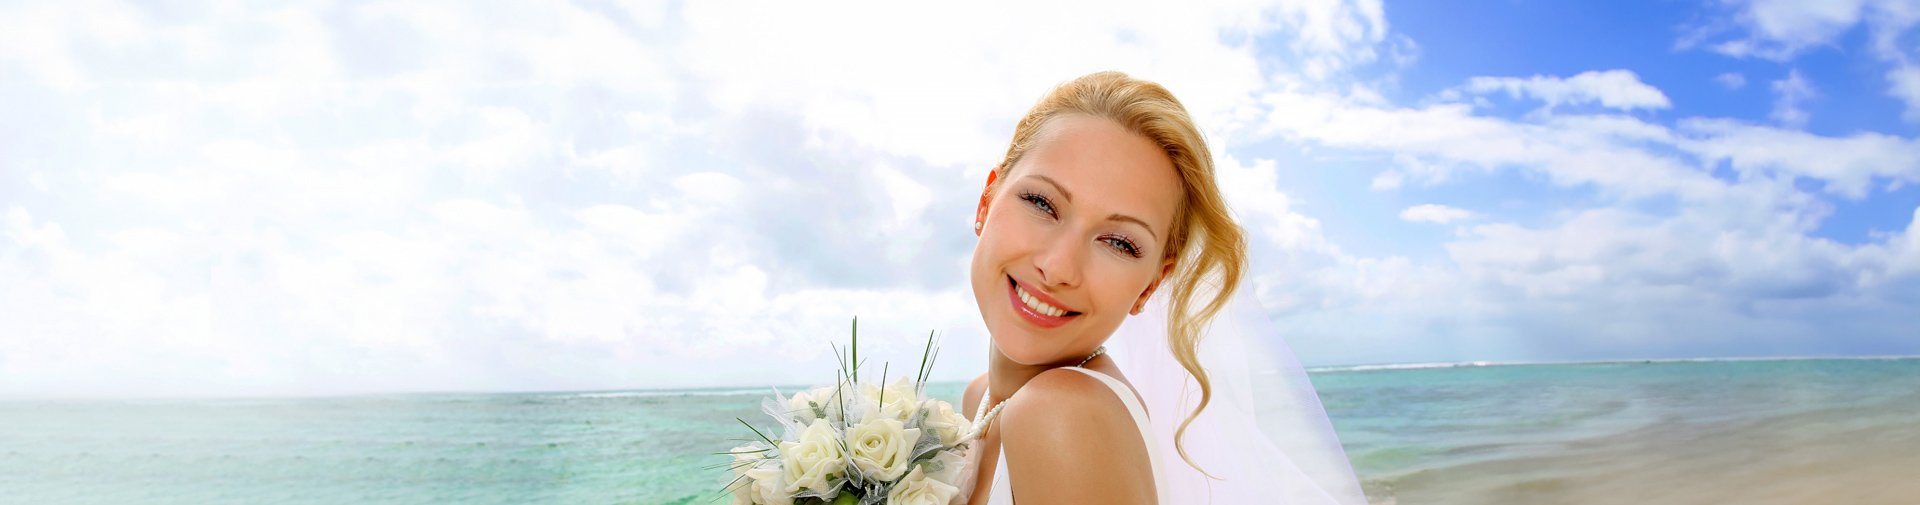 Woman posing on beach in wedding gown